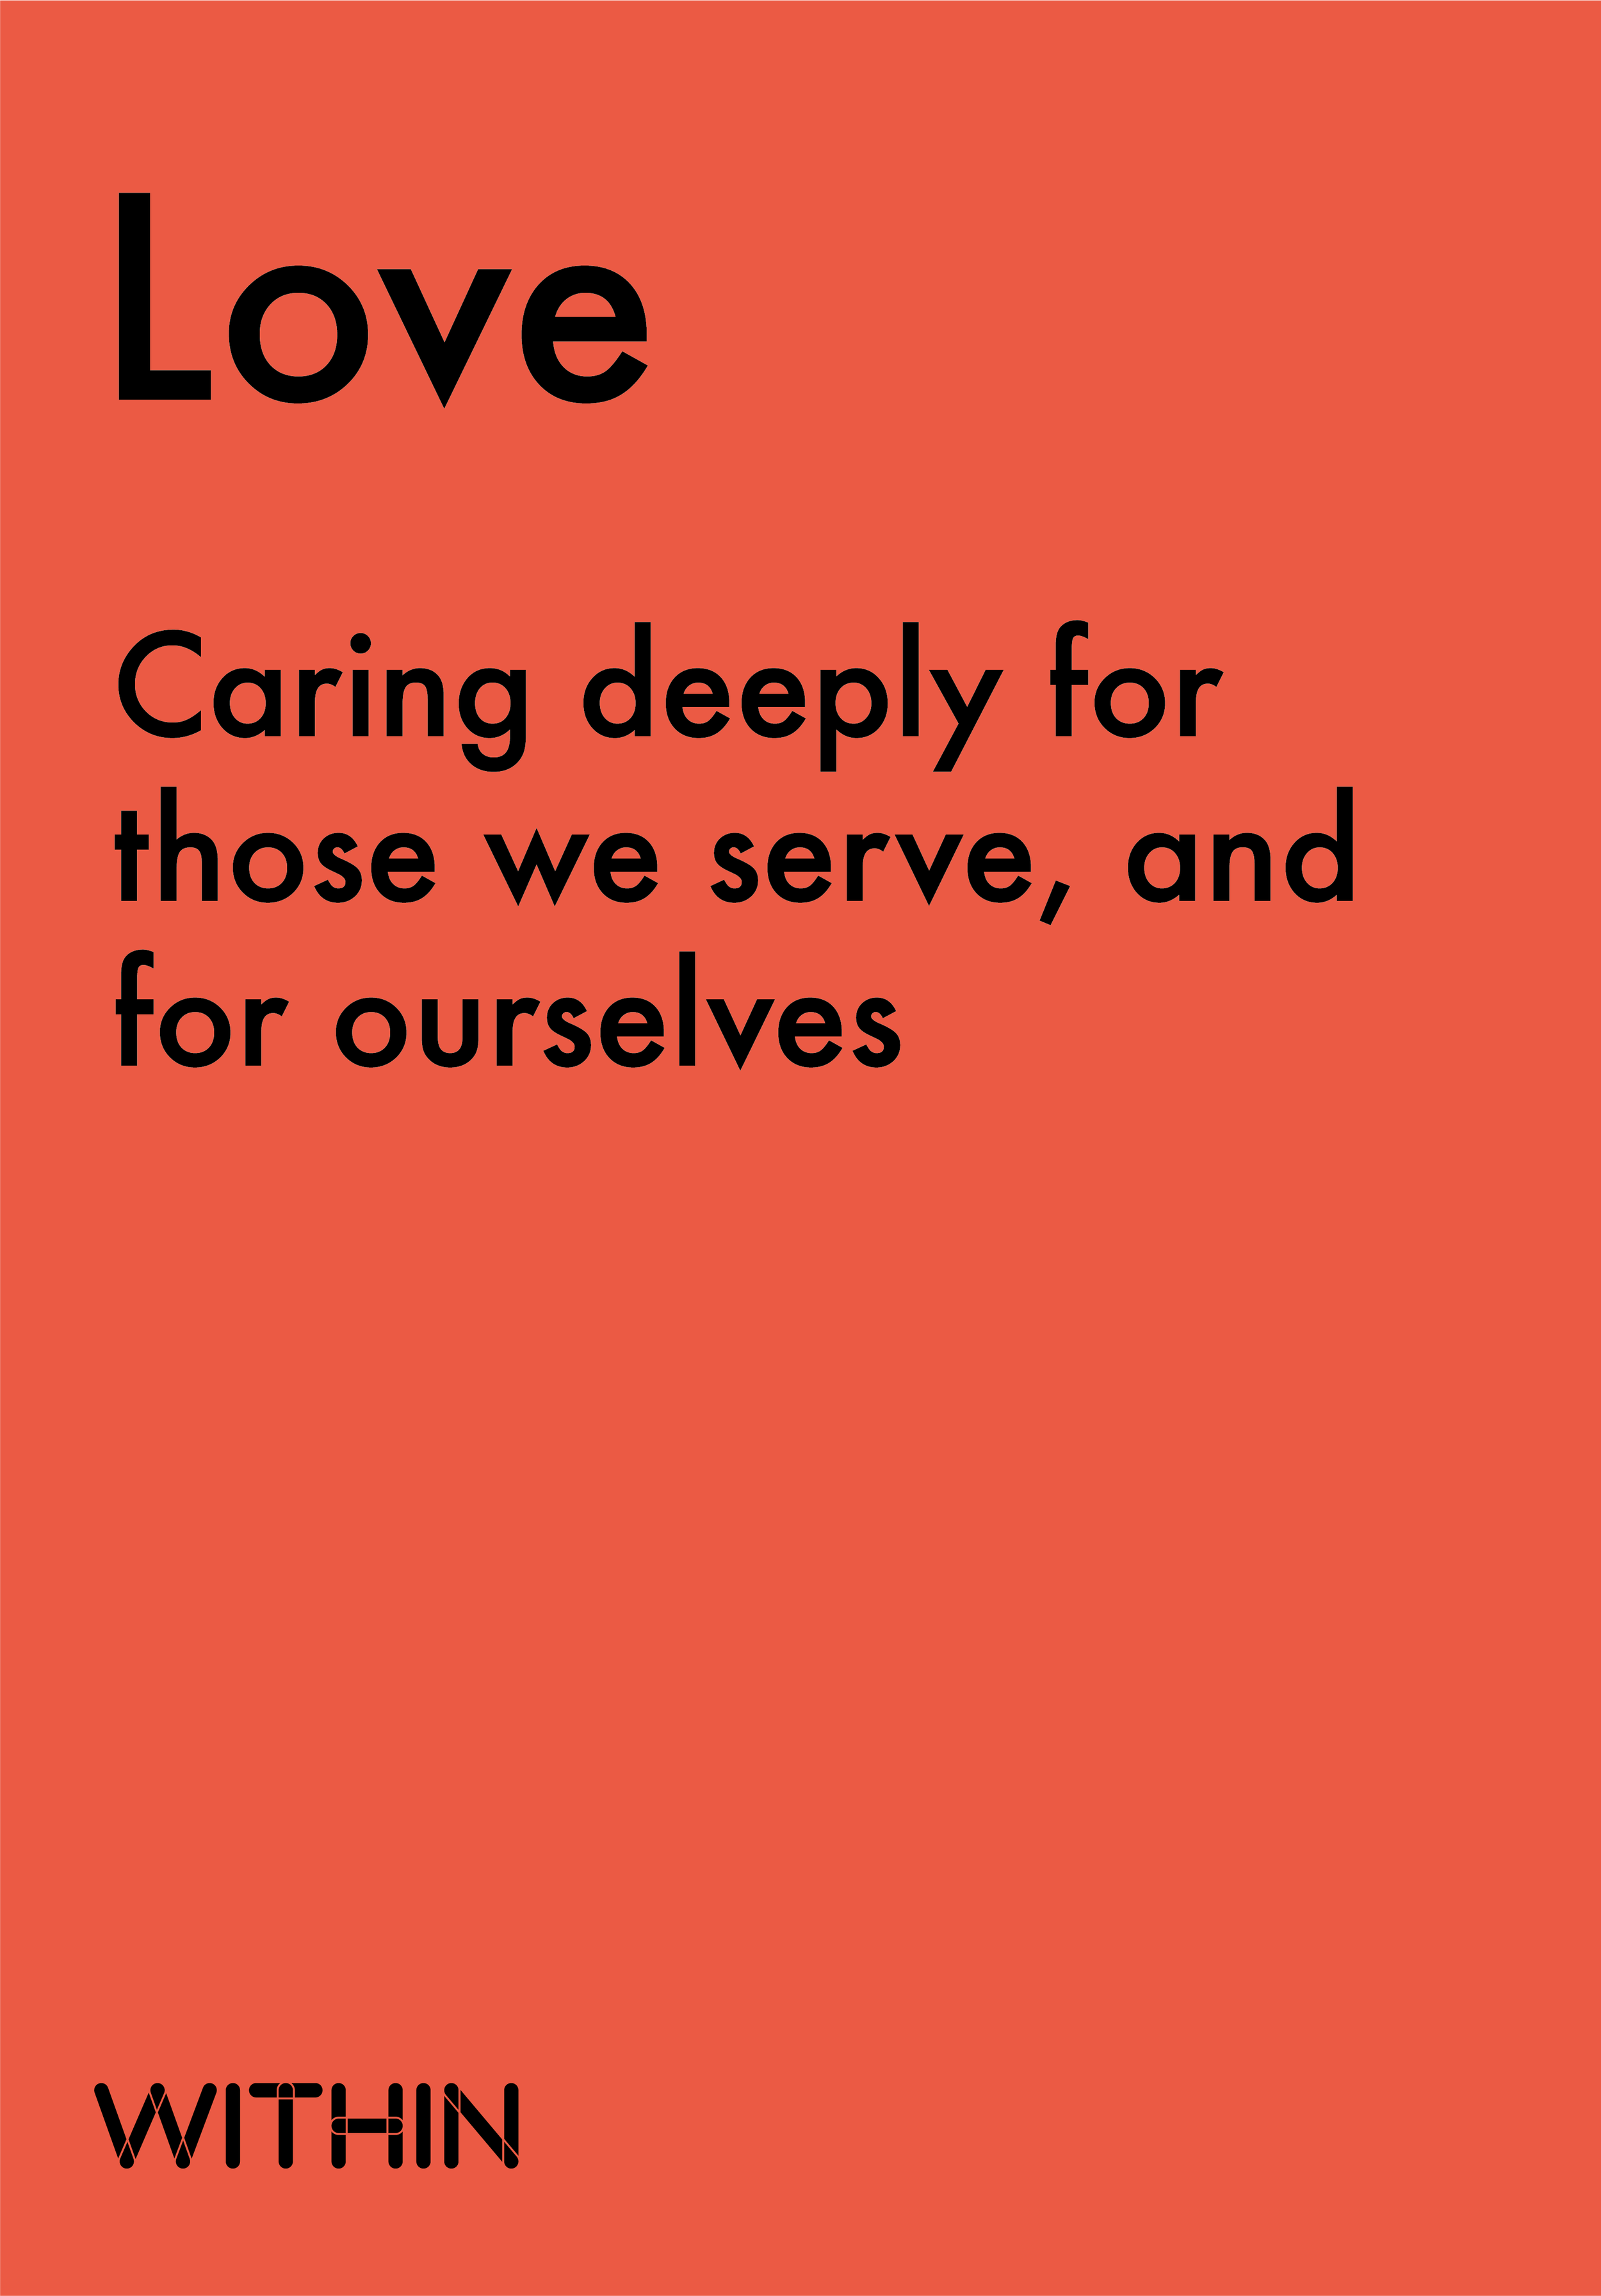 Human-Centred Leadership Values 8 Love